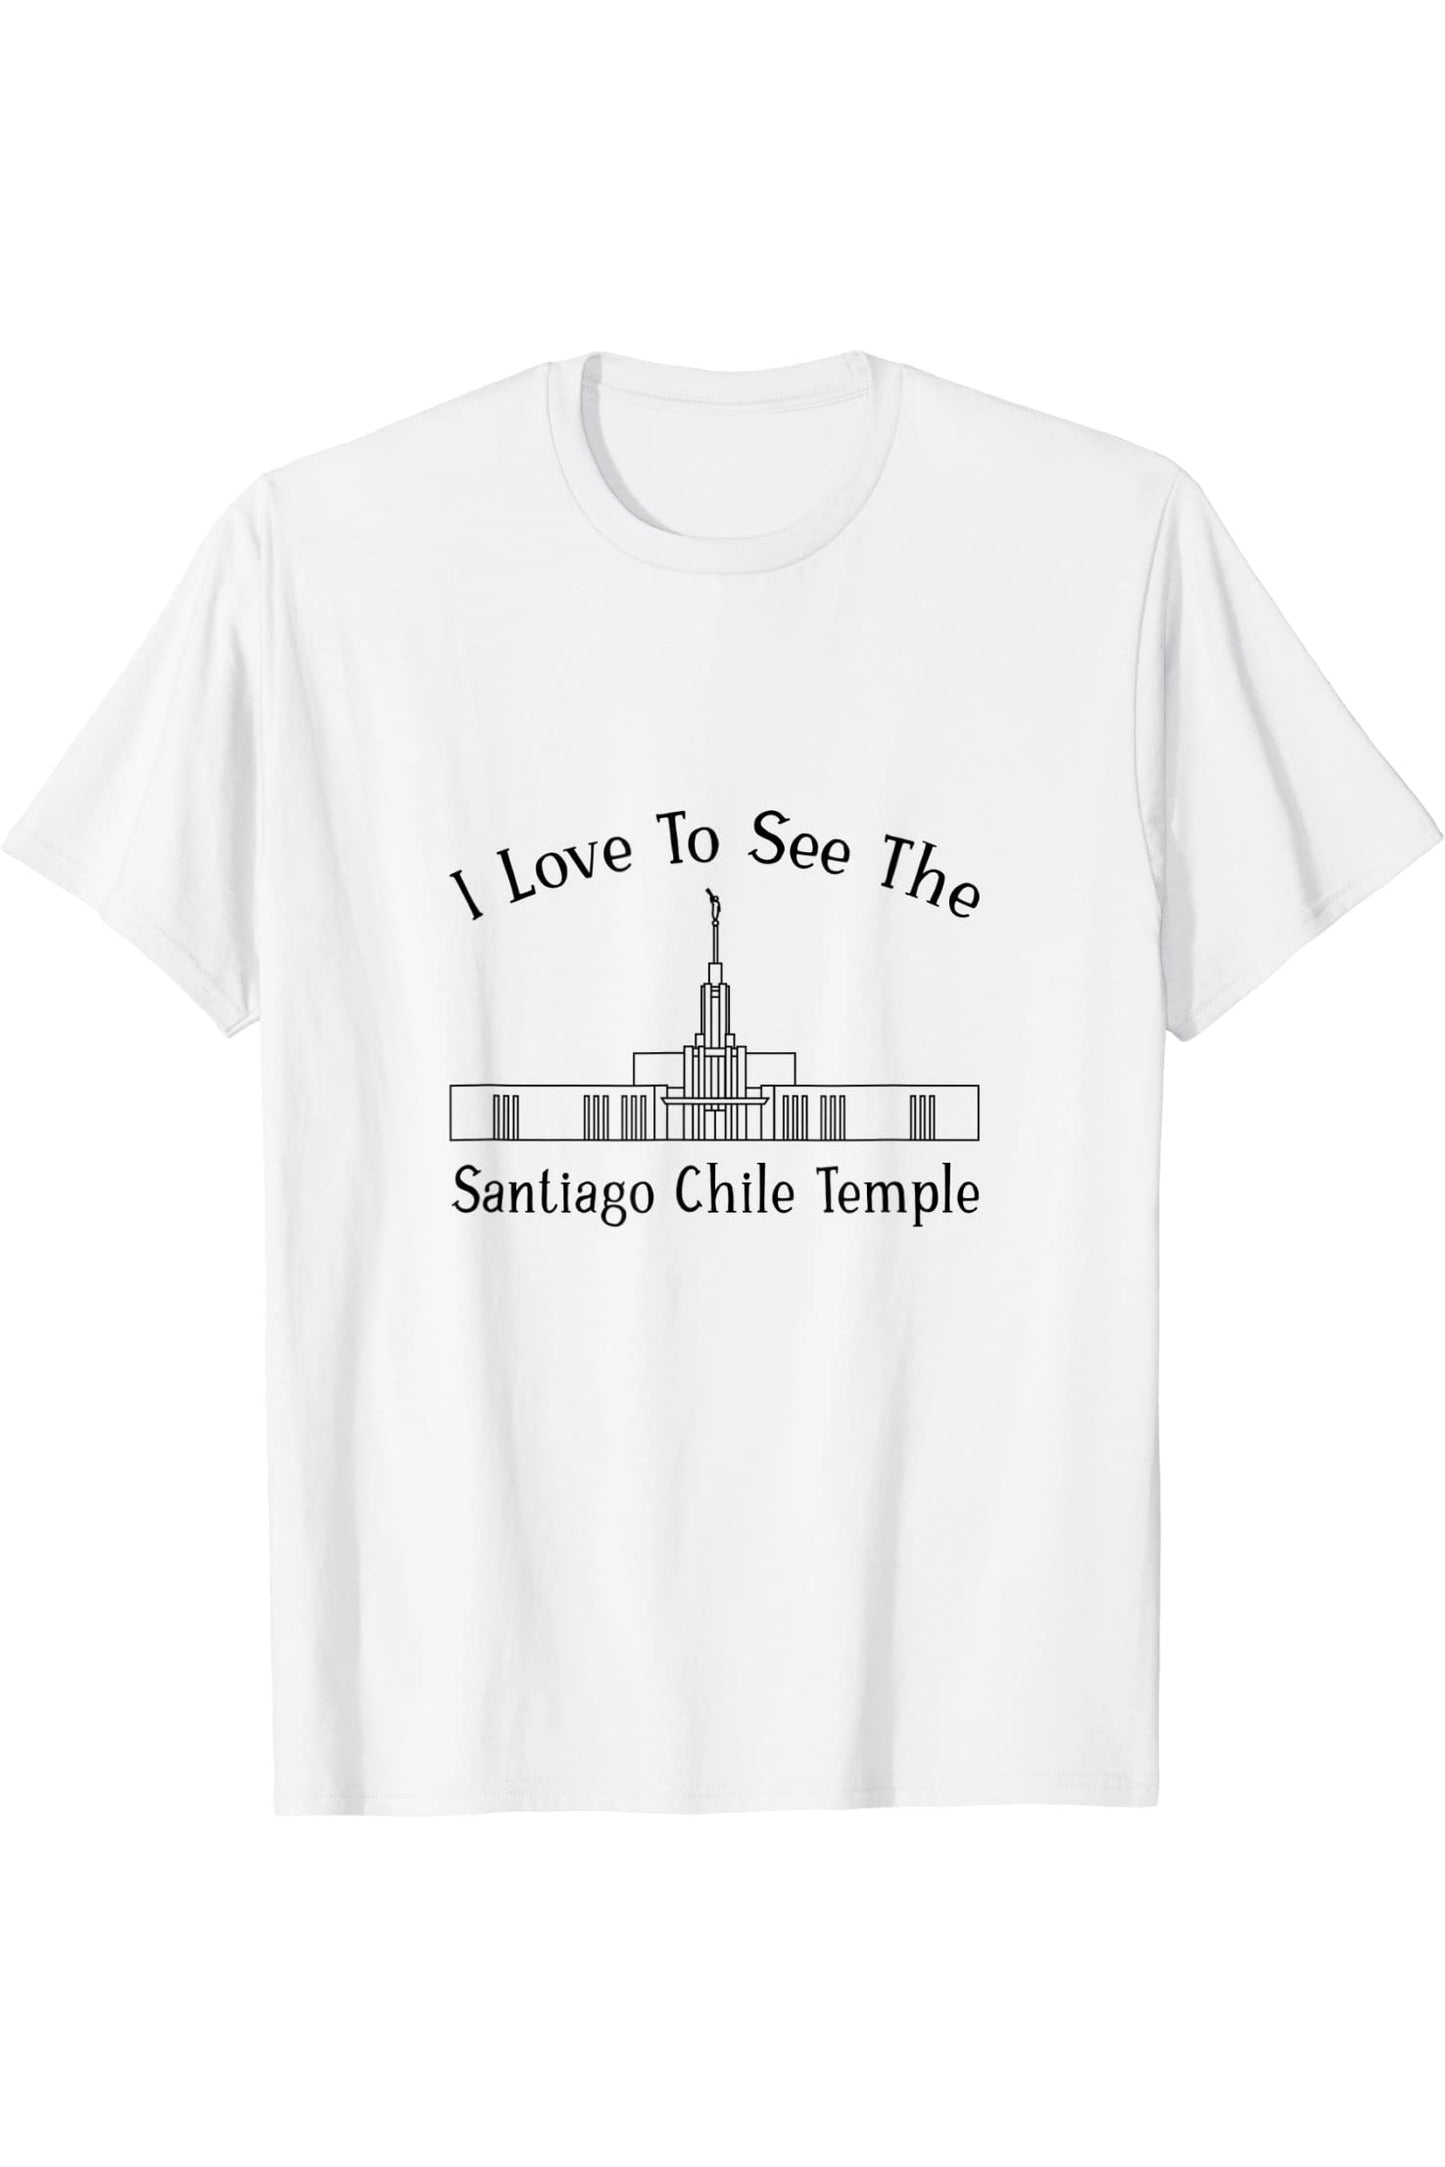 Santiago Chile Temple T-Shirt - Happy Style (English) US